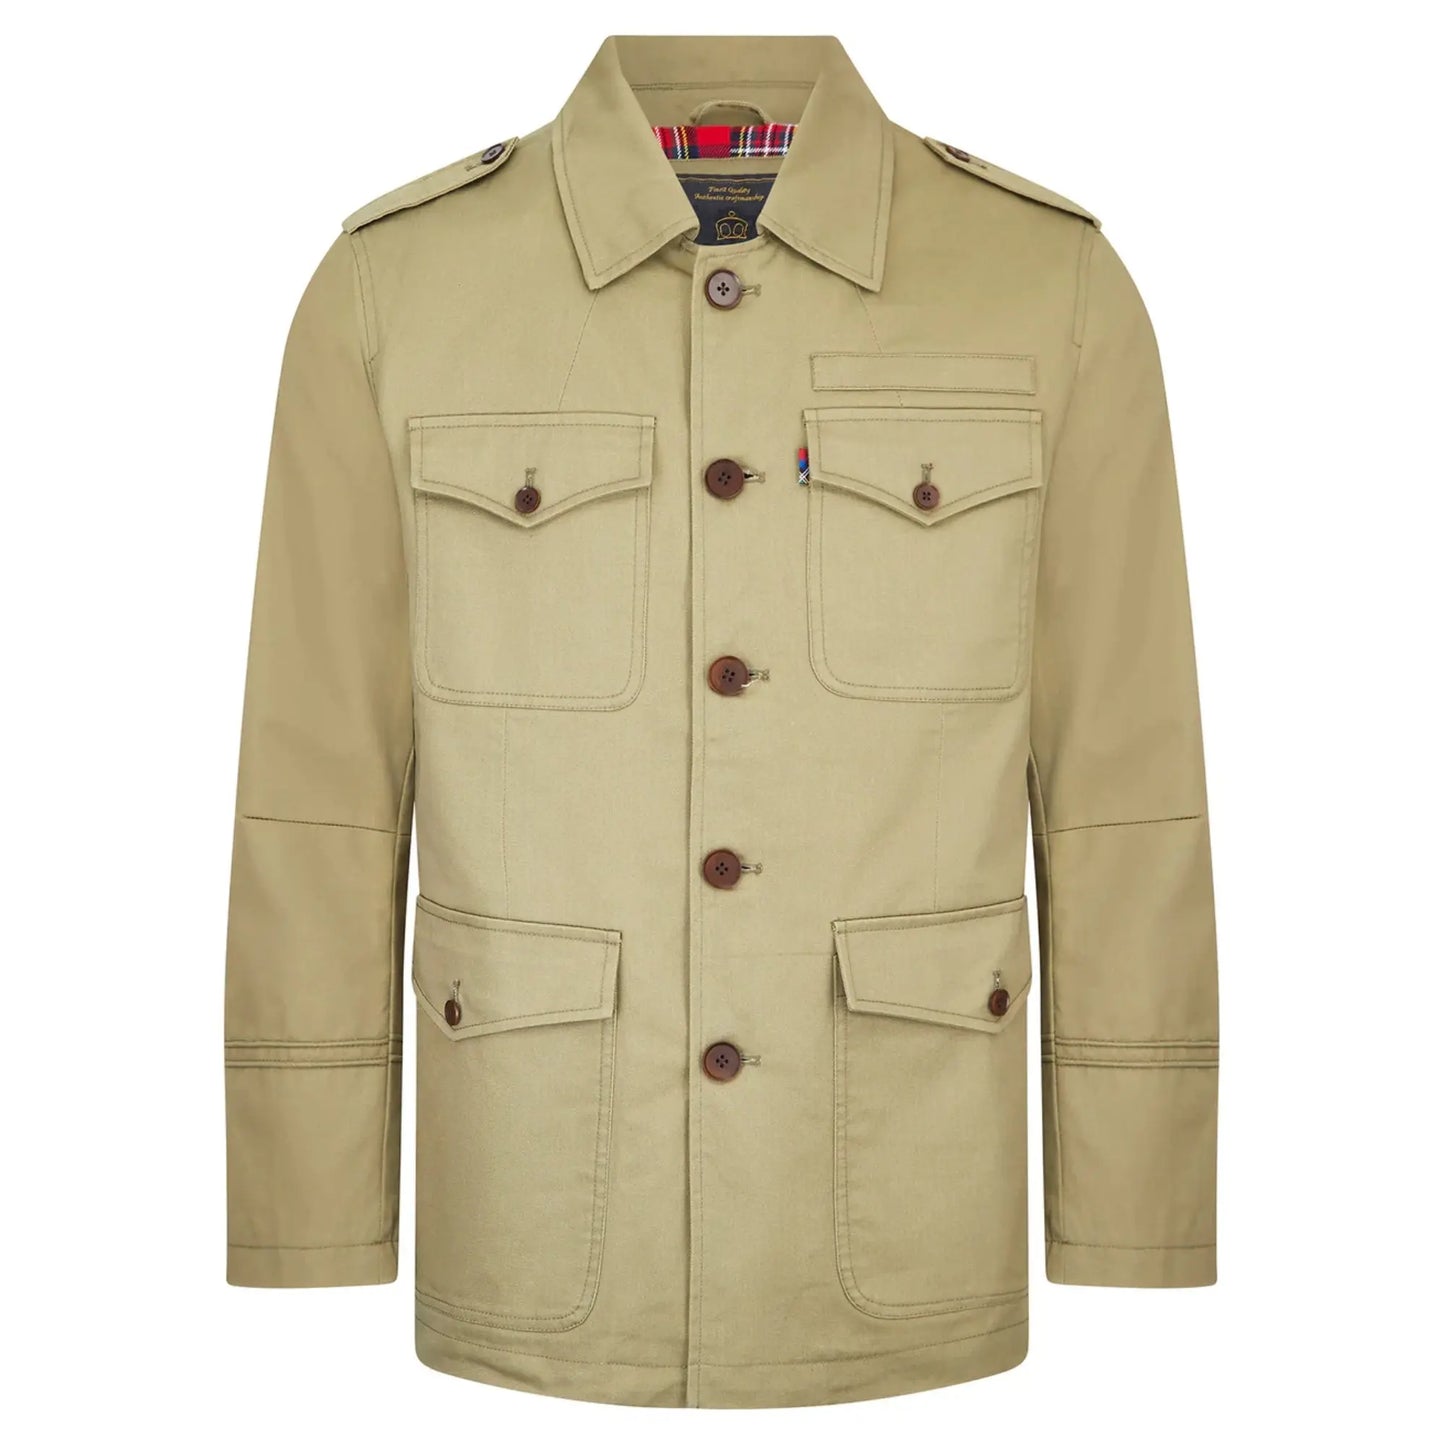 Buy Merc London George Field Jacket - Olive | Harrington Jacketss at Woven Durham